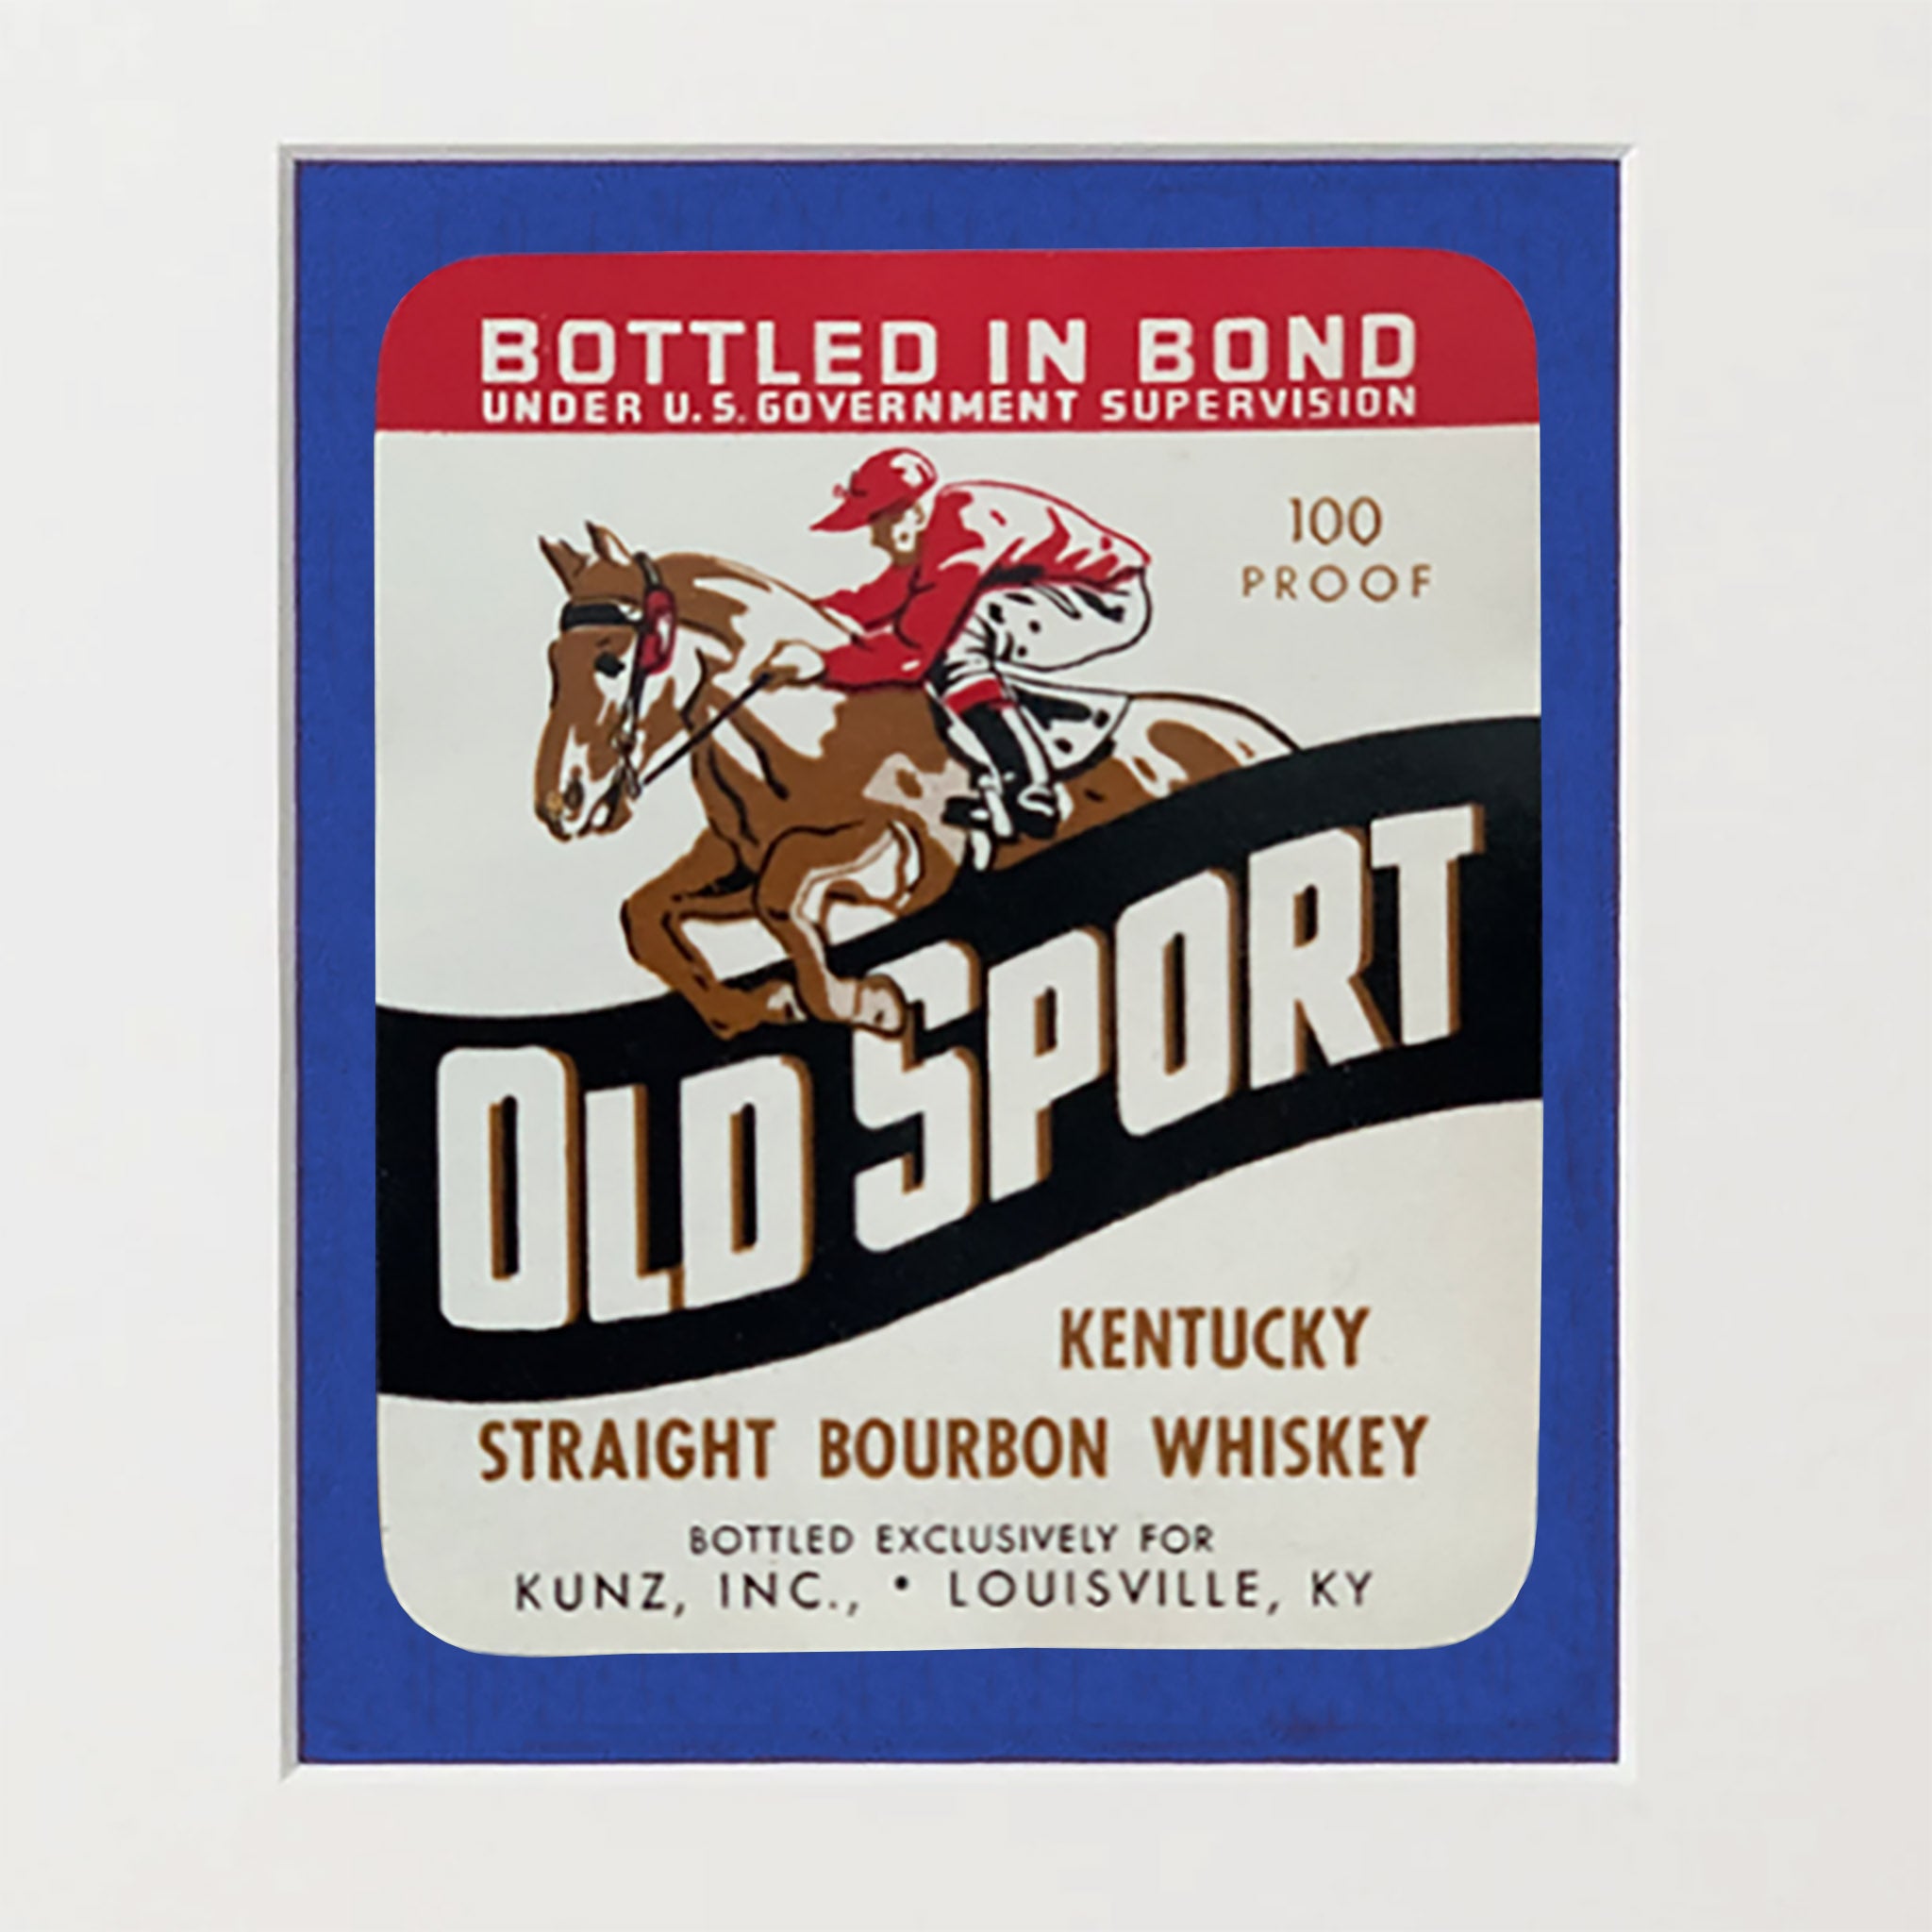 Framed Old Sport Kentucky Straight Bourbon Label